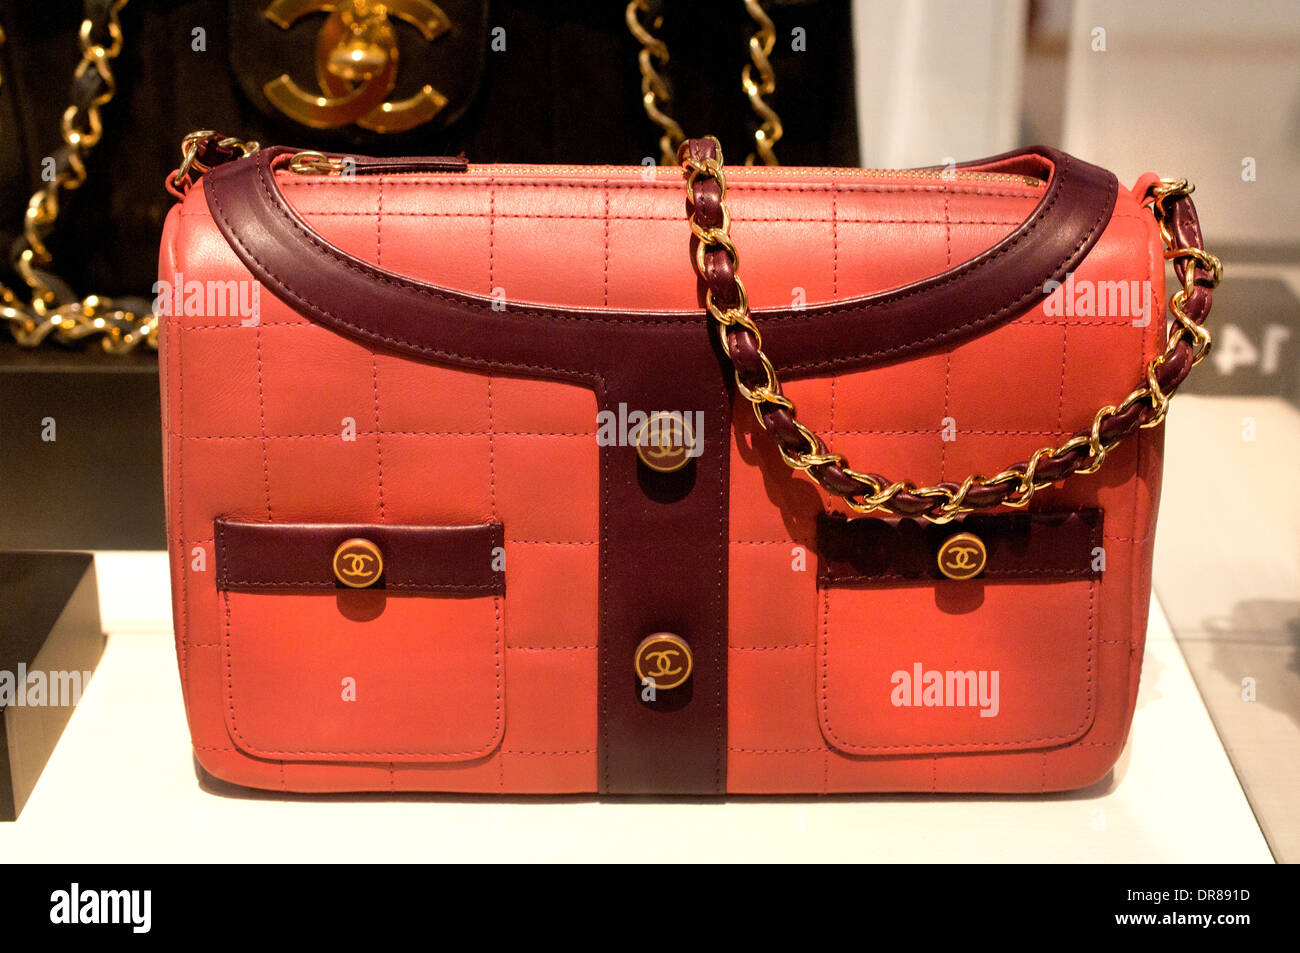 Chanel bag - 121 Brand Shop